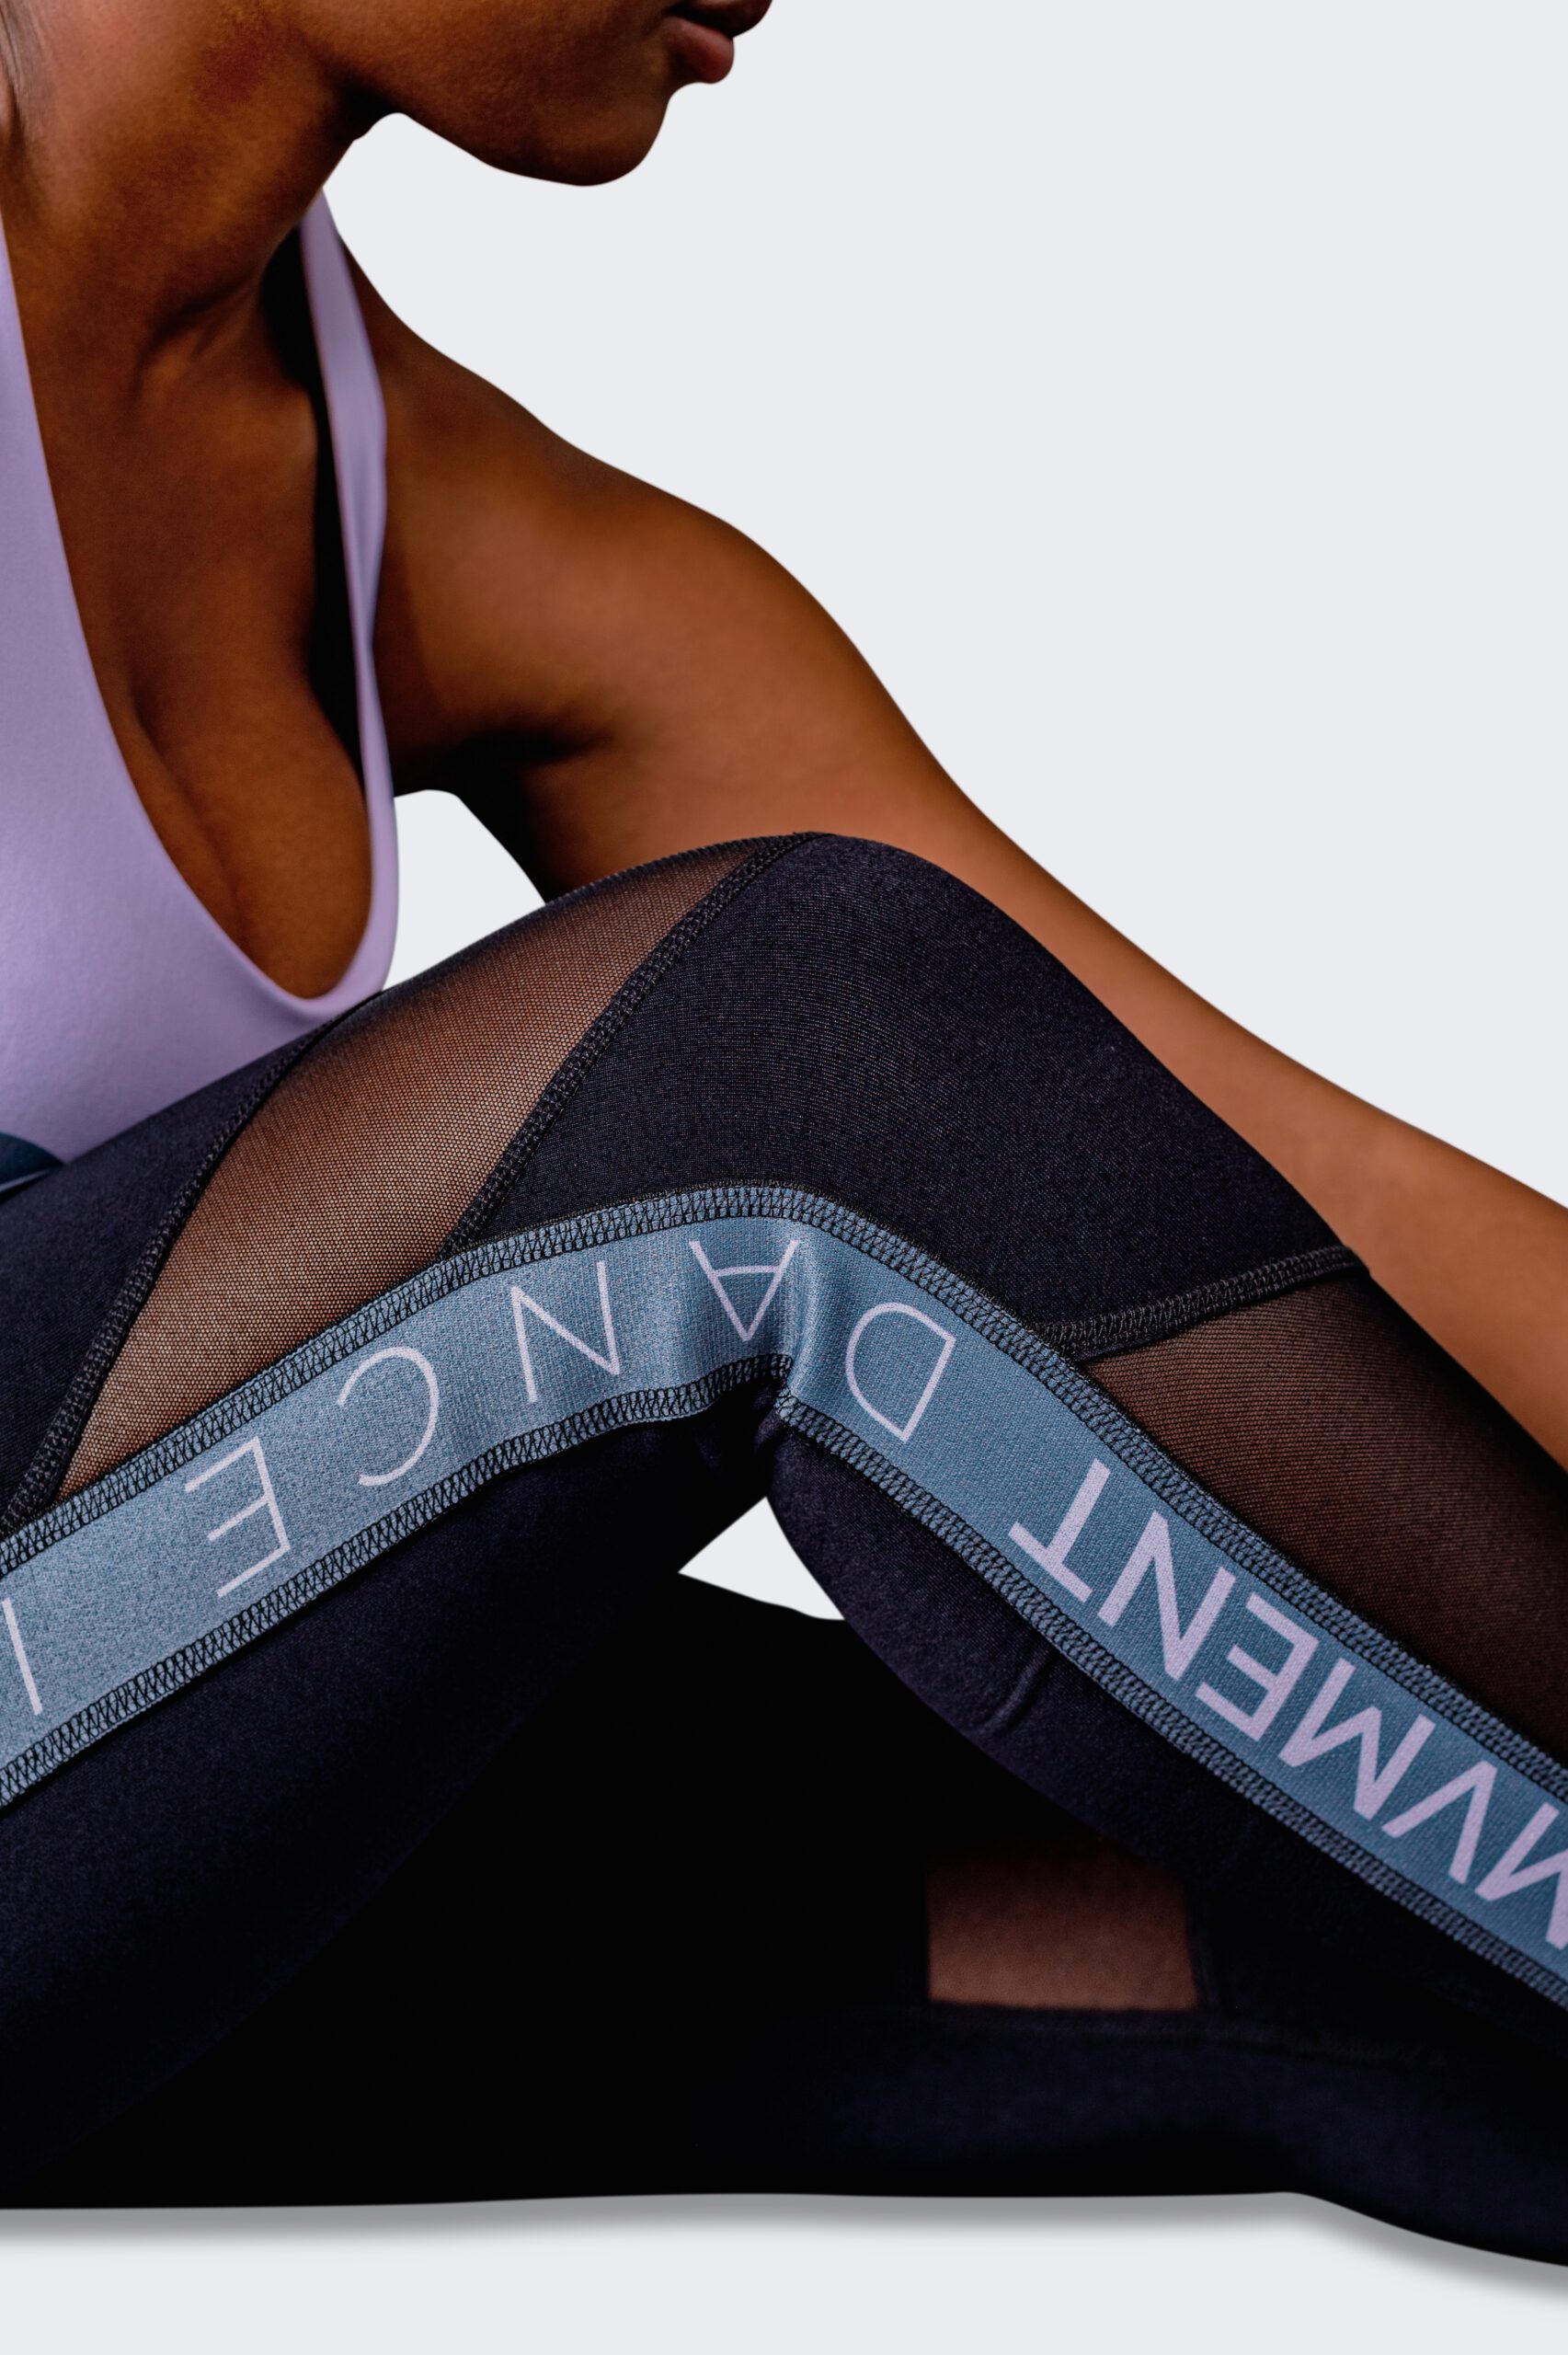 Women Girls Leggings Yoga Pants 3D Printed Colourful Vortex Hot in